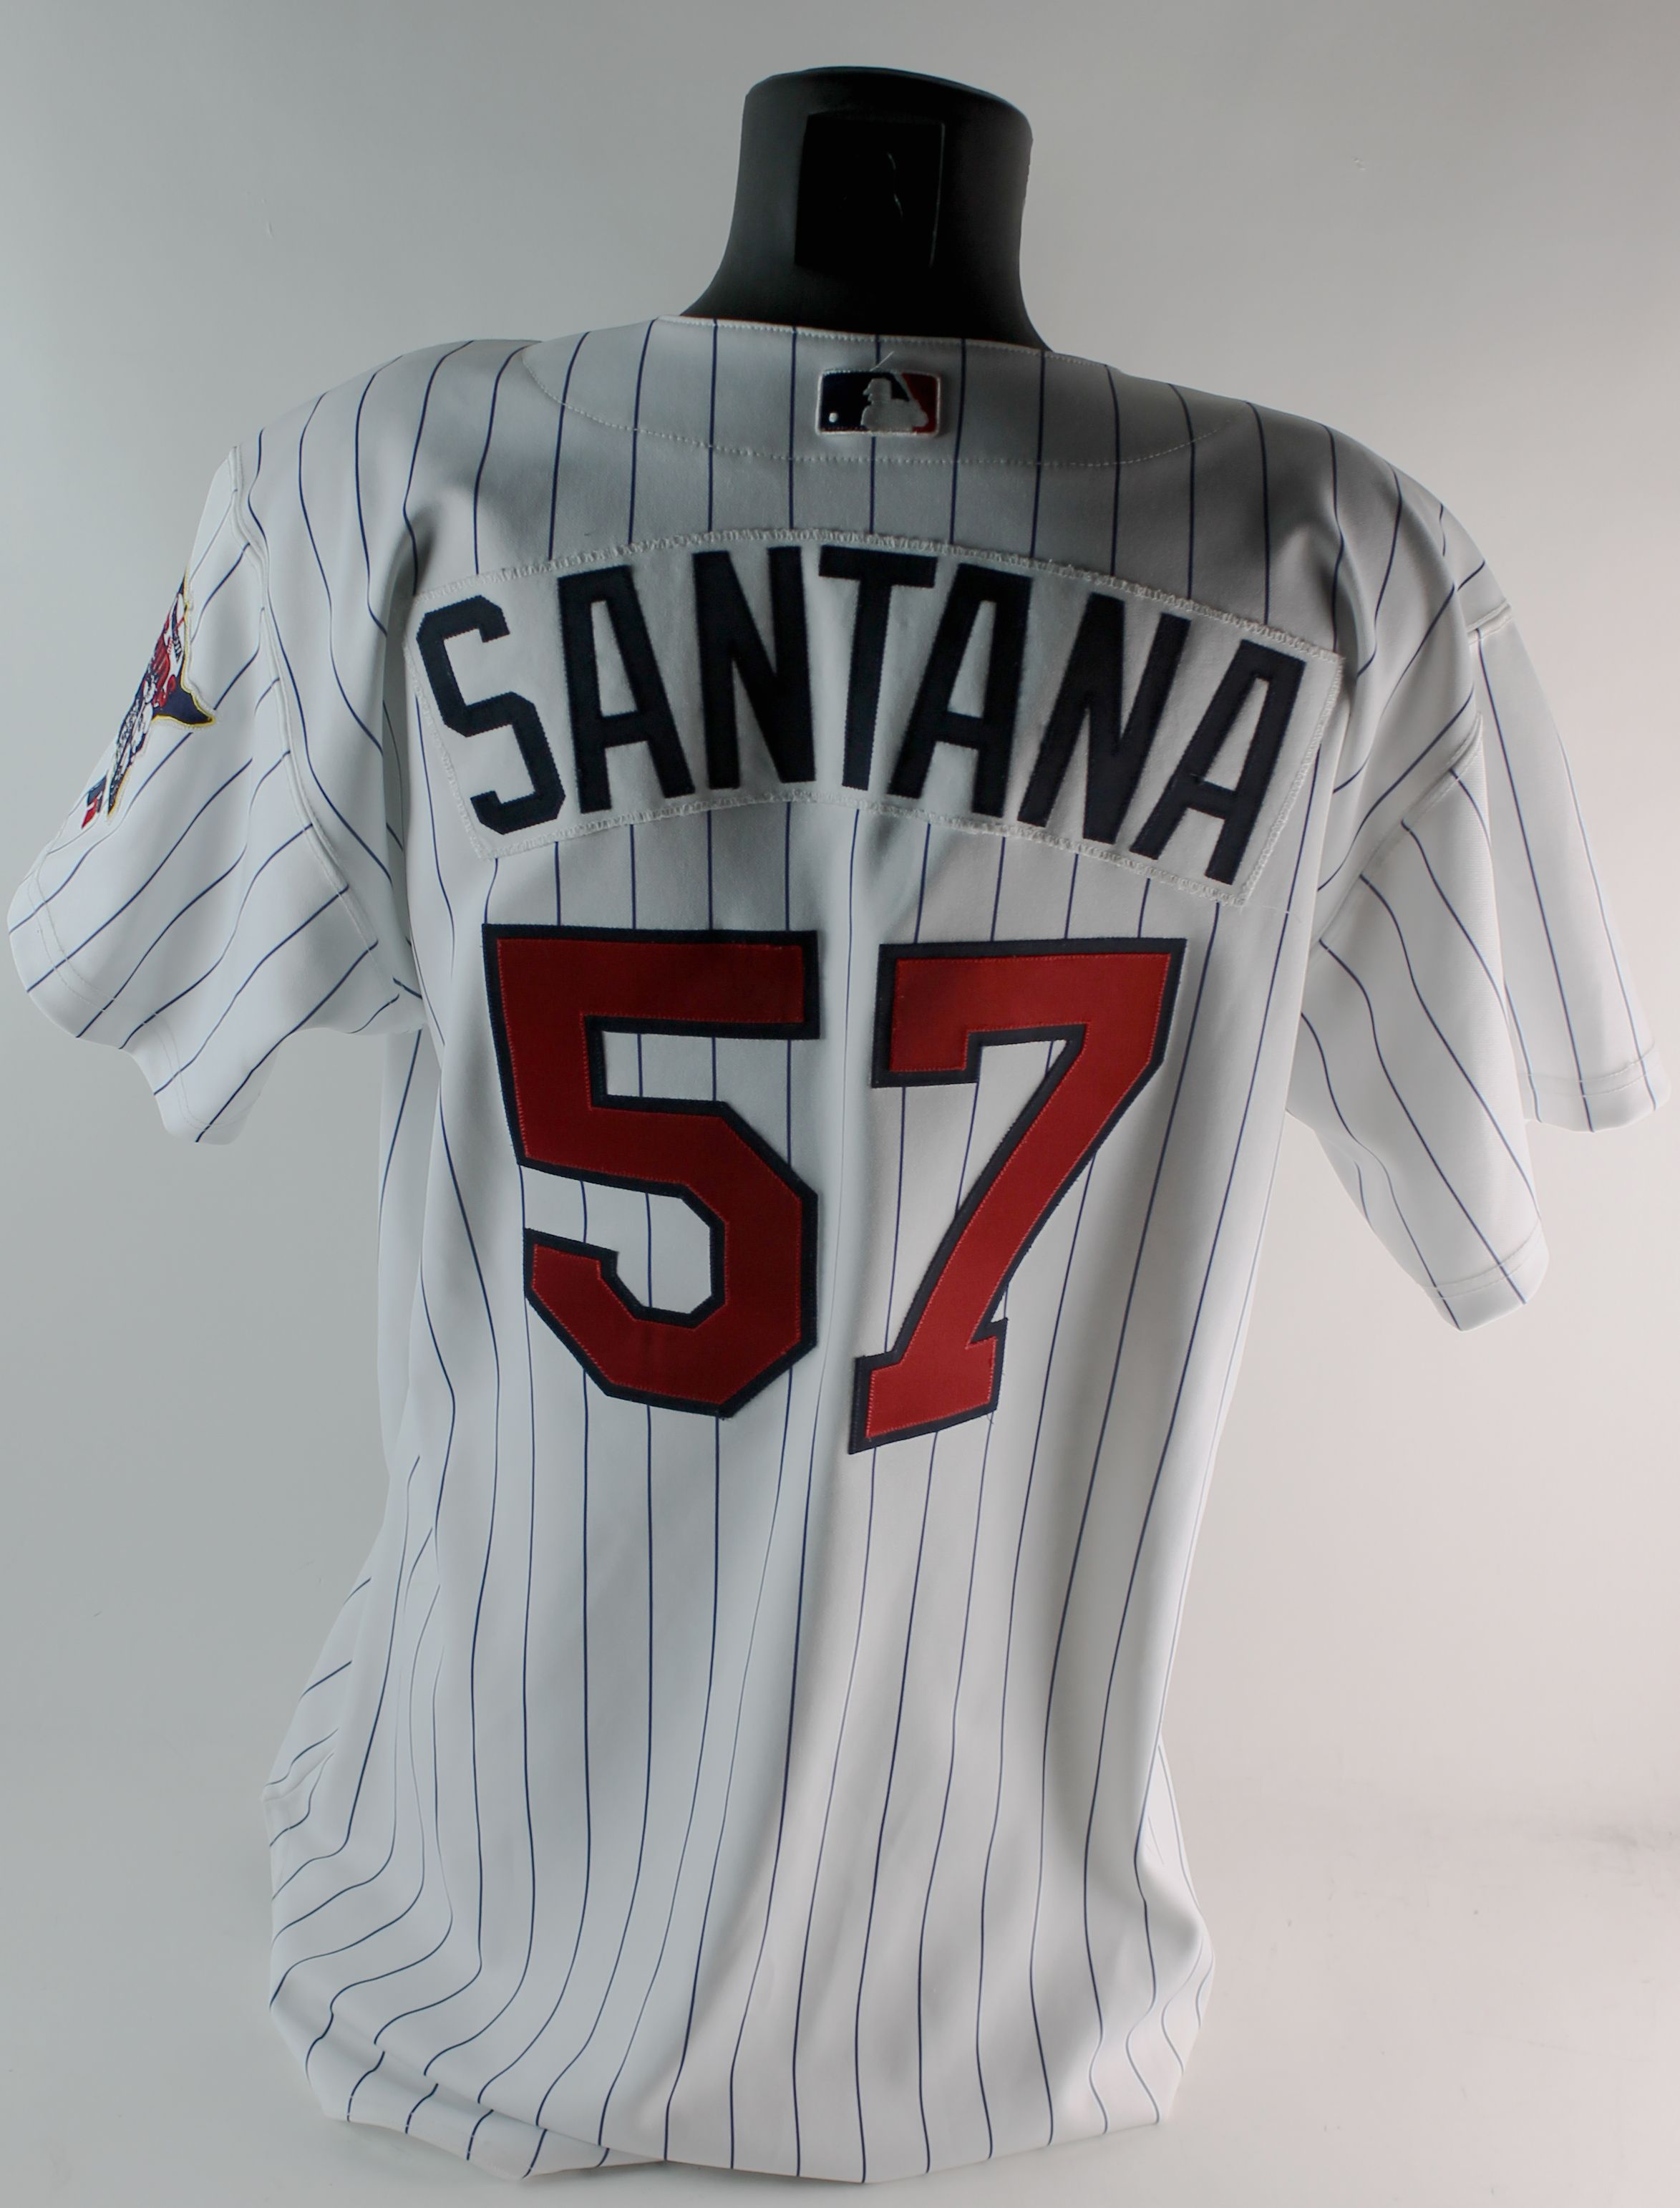 Johan Santana player worn jersey patch baseball card (New York